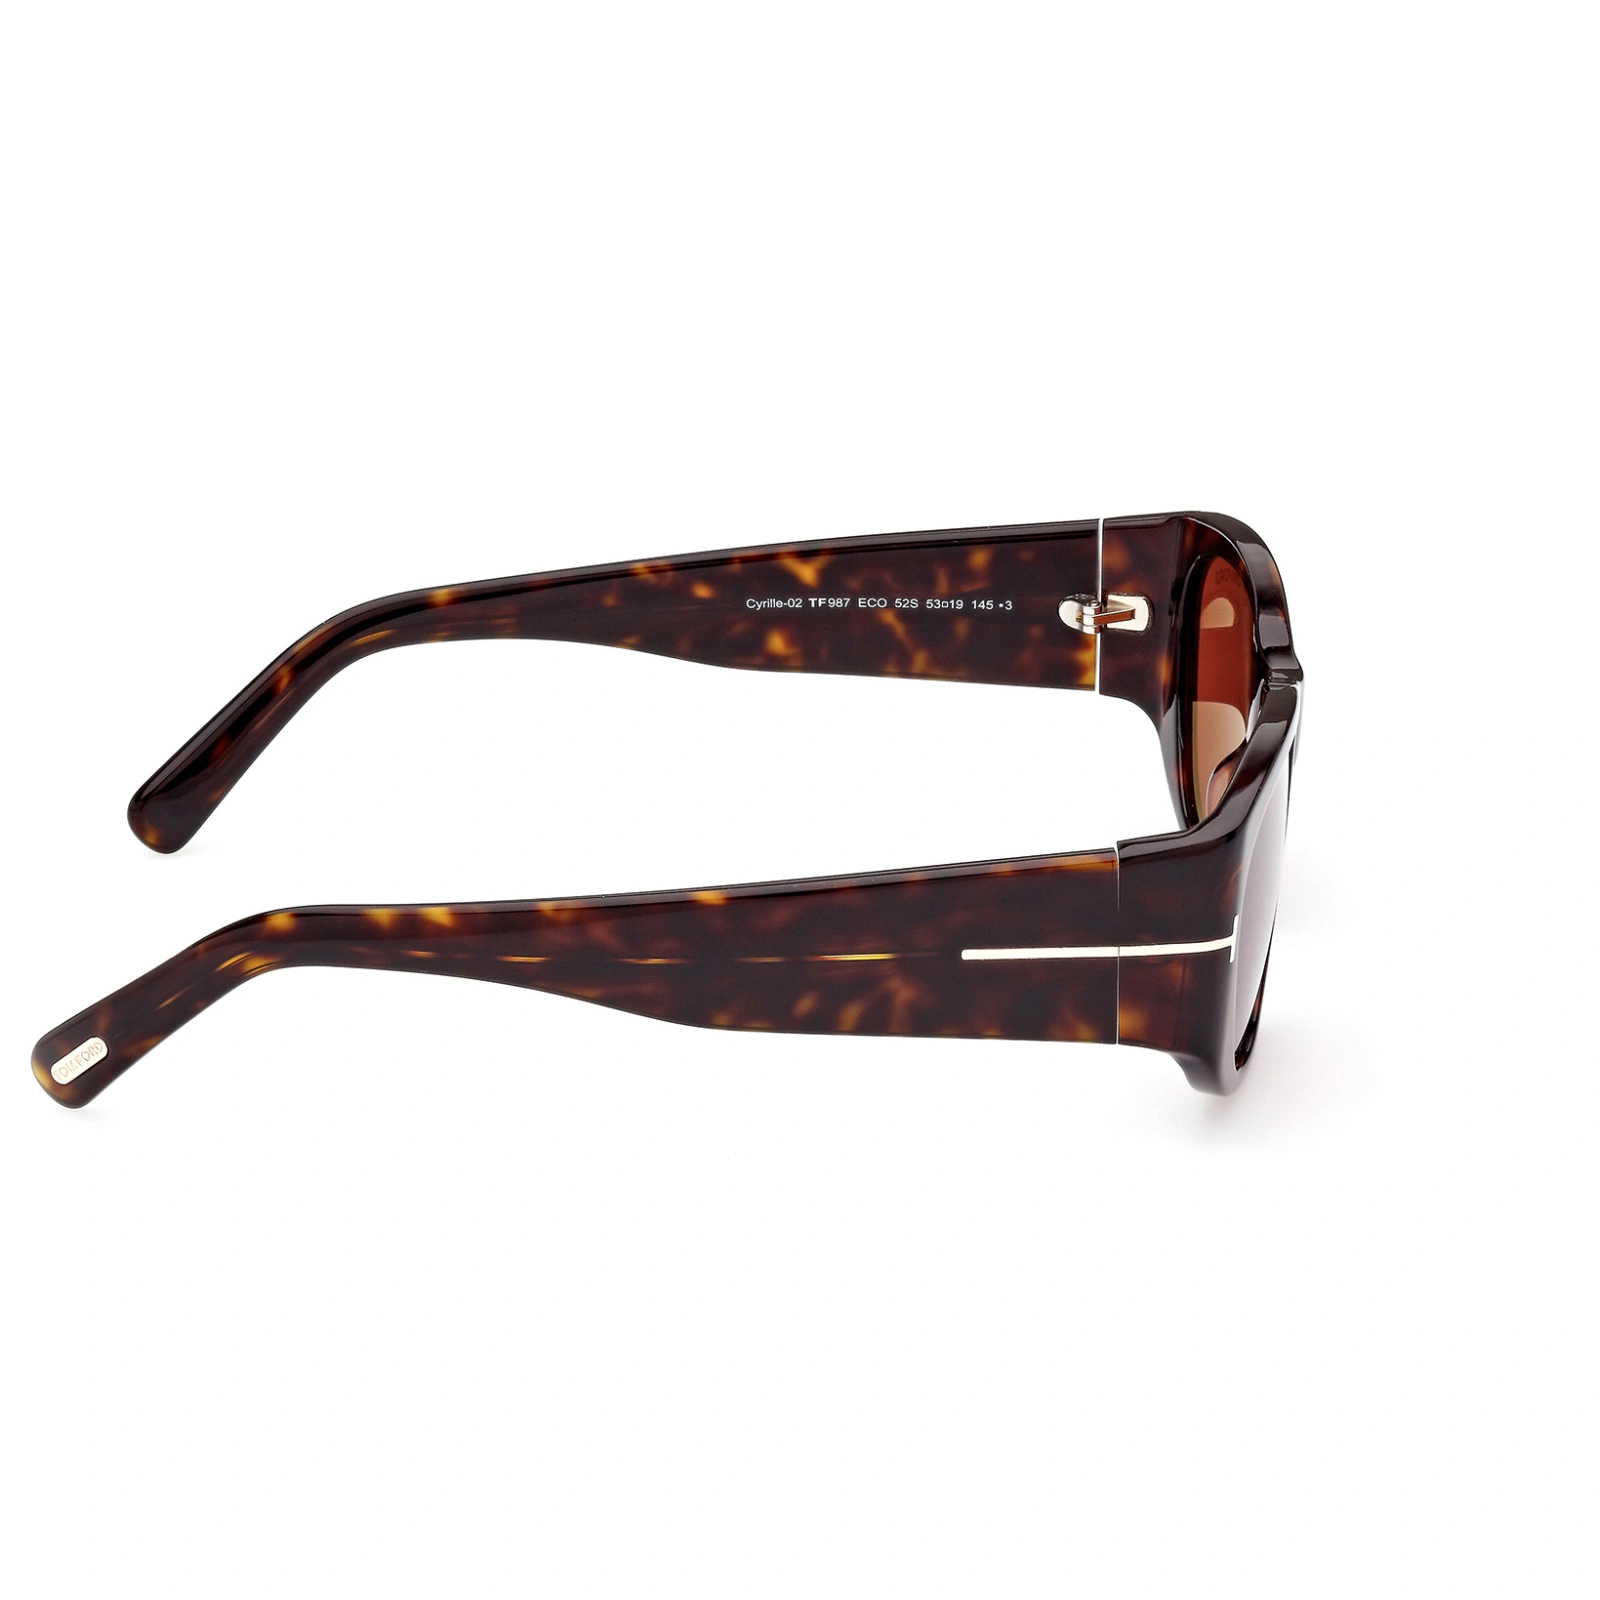 Tom Ford Sunglasses Tom Ford Sunglasses FT0987 52S 53mm Cyrille Eyeglasses Eyewear UK USA Australia 